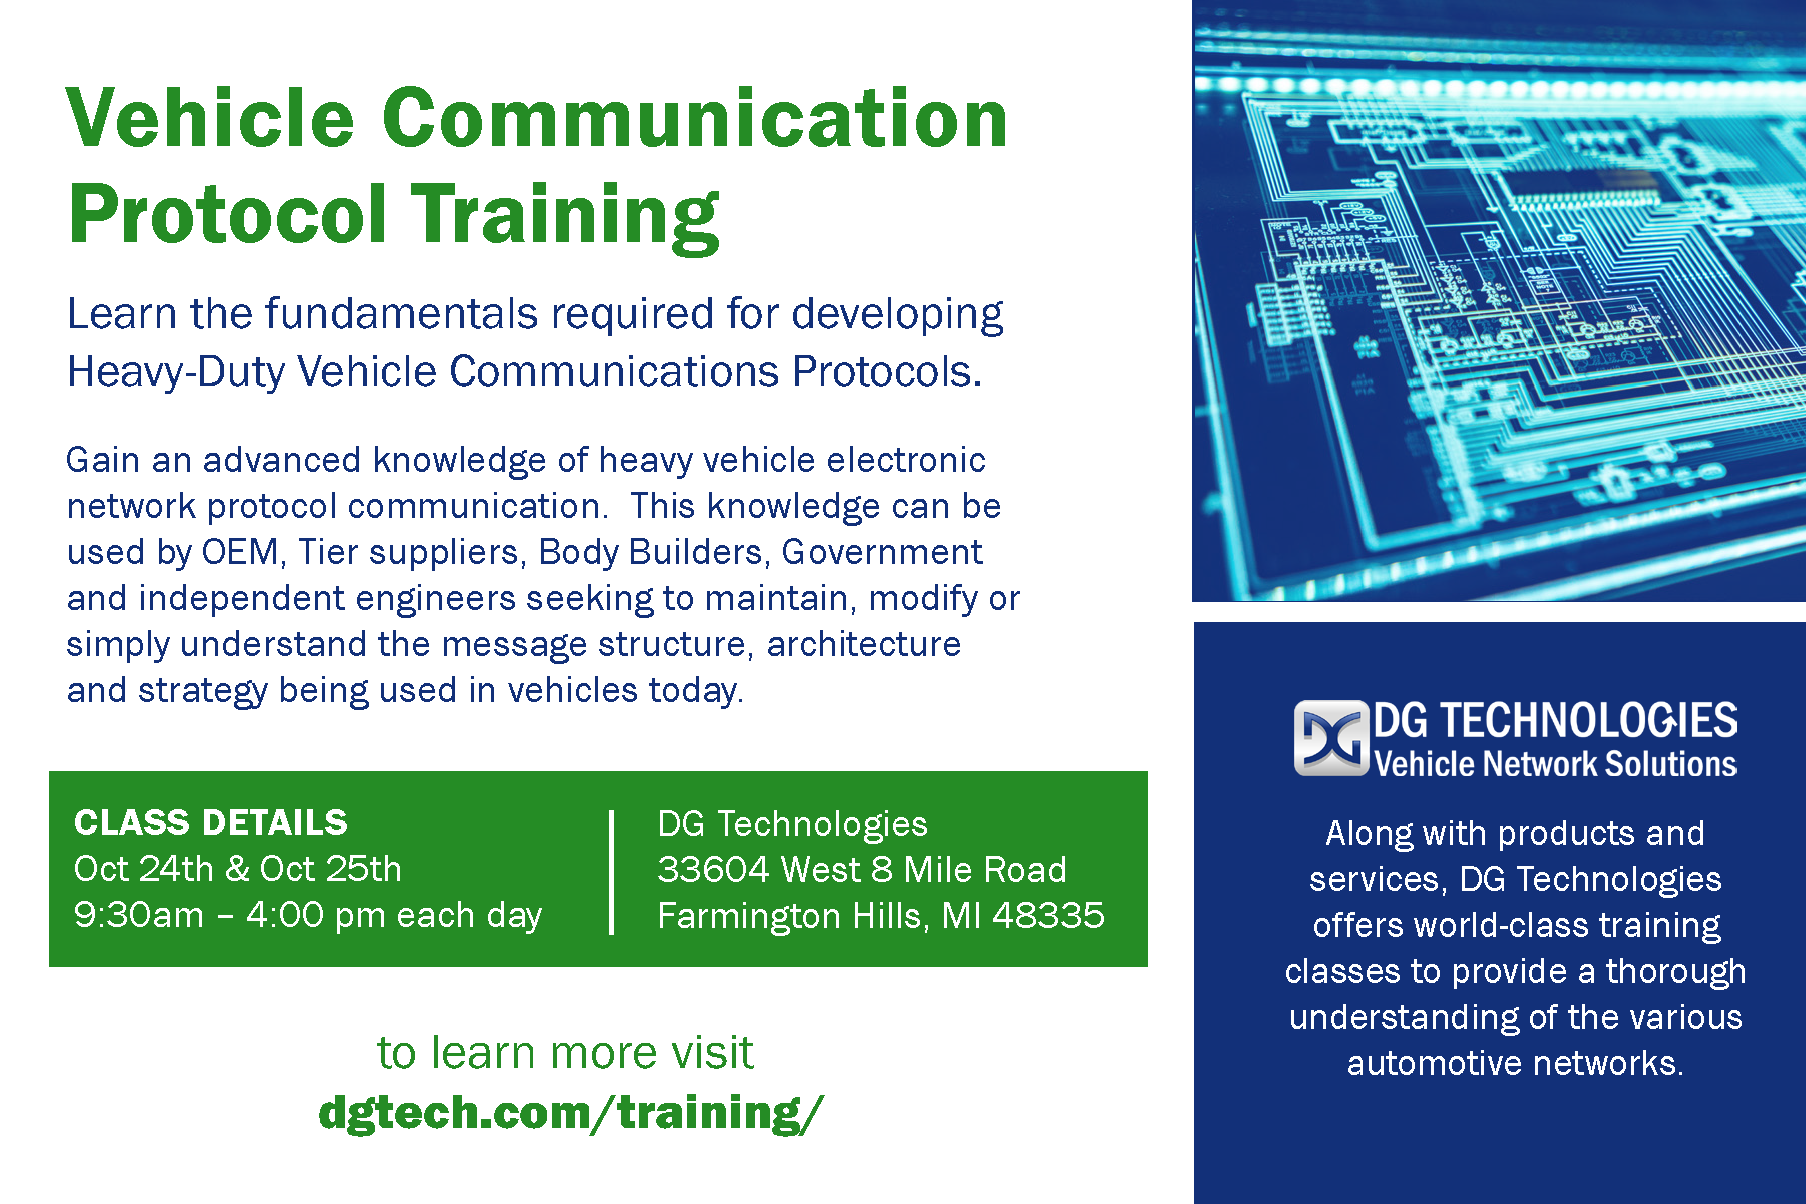 Training from DG Technologies